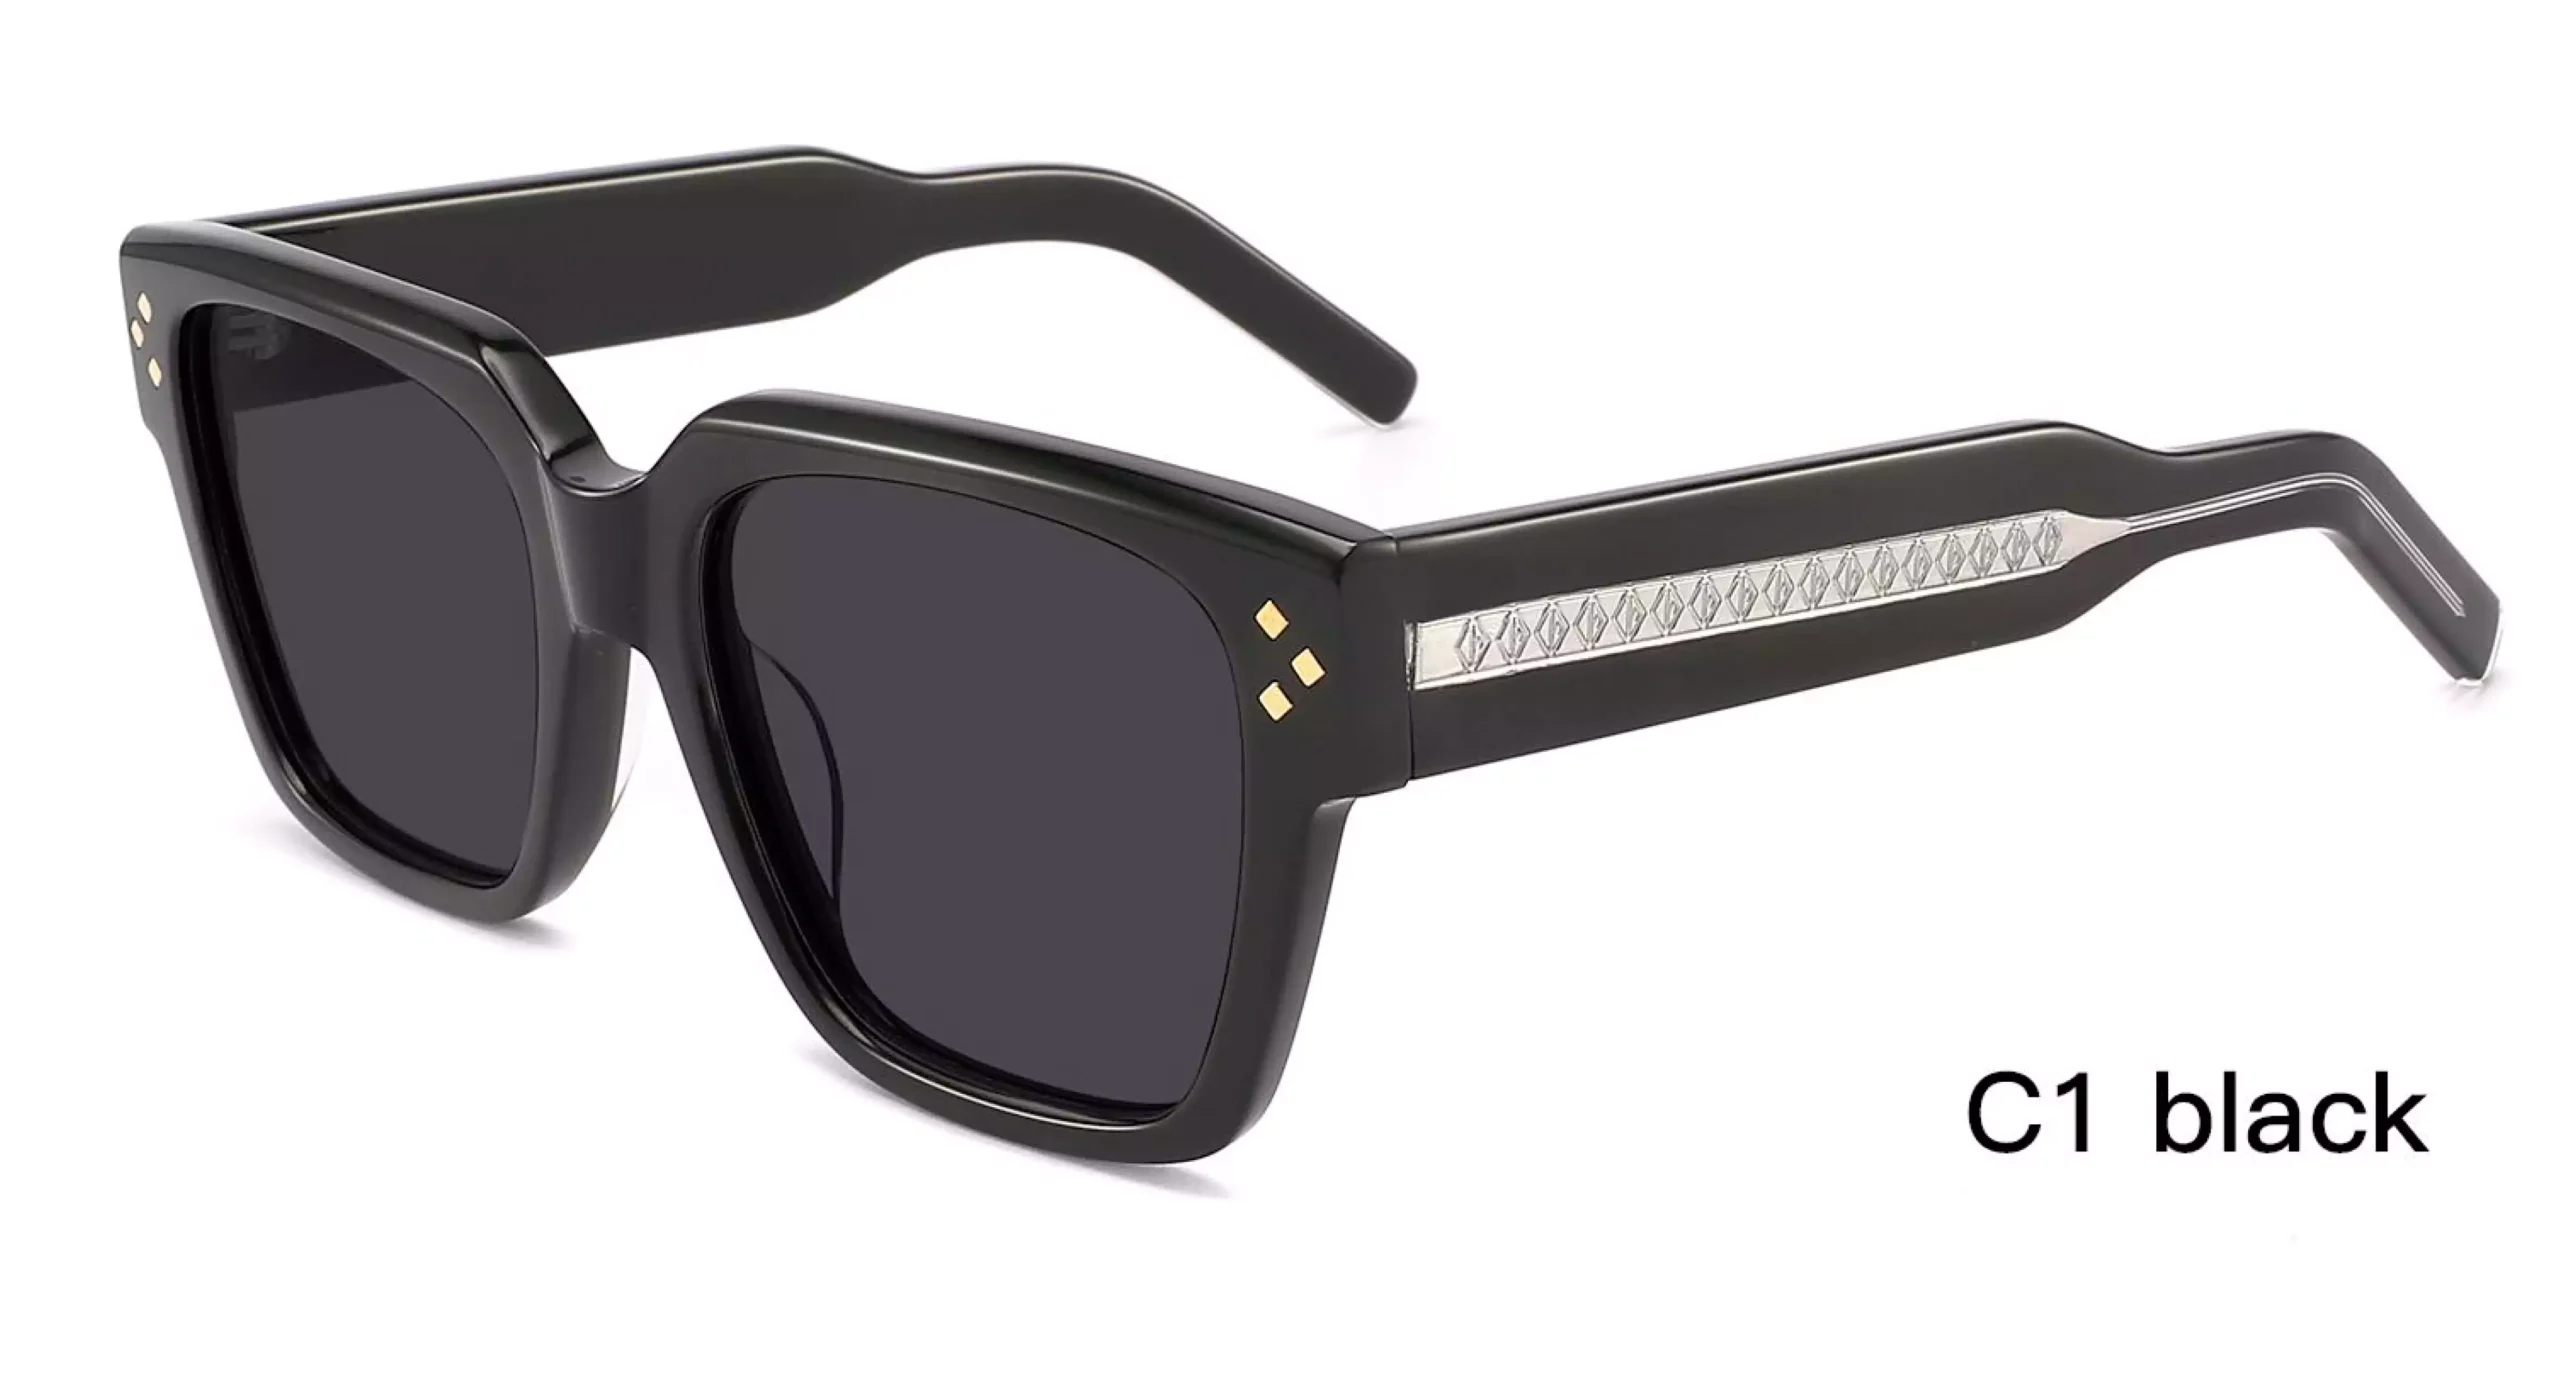 Wholesale Sunglasses Suppliers, Black, rivets, UV protection sunglasses, laser engraved wire cores, acetate sunglasses